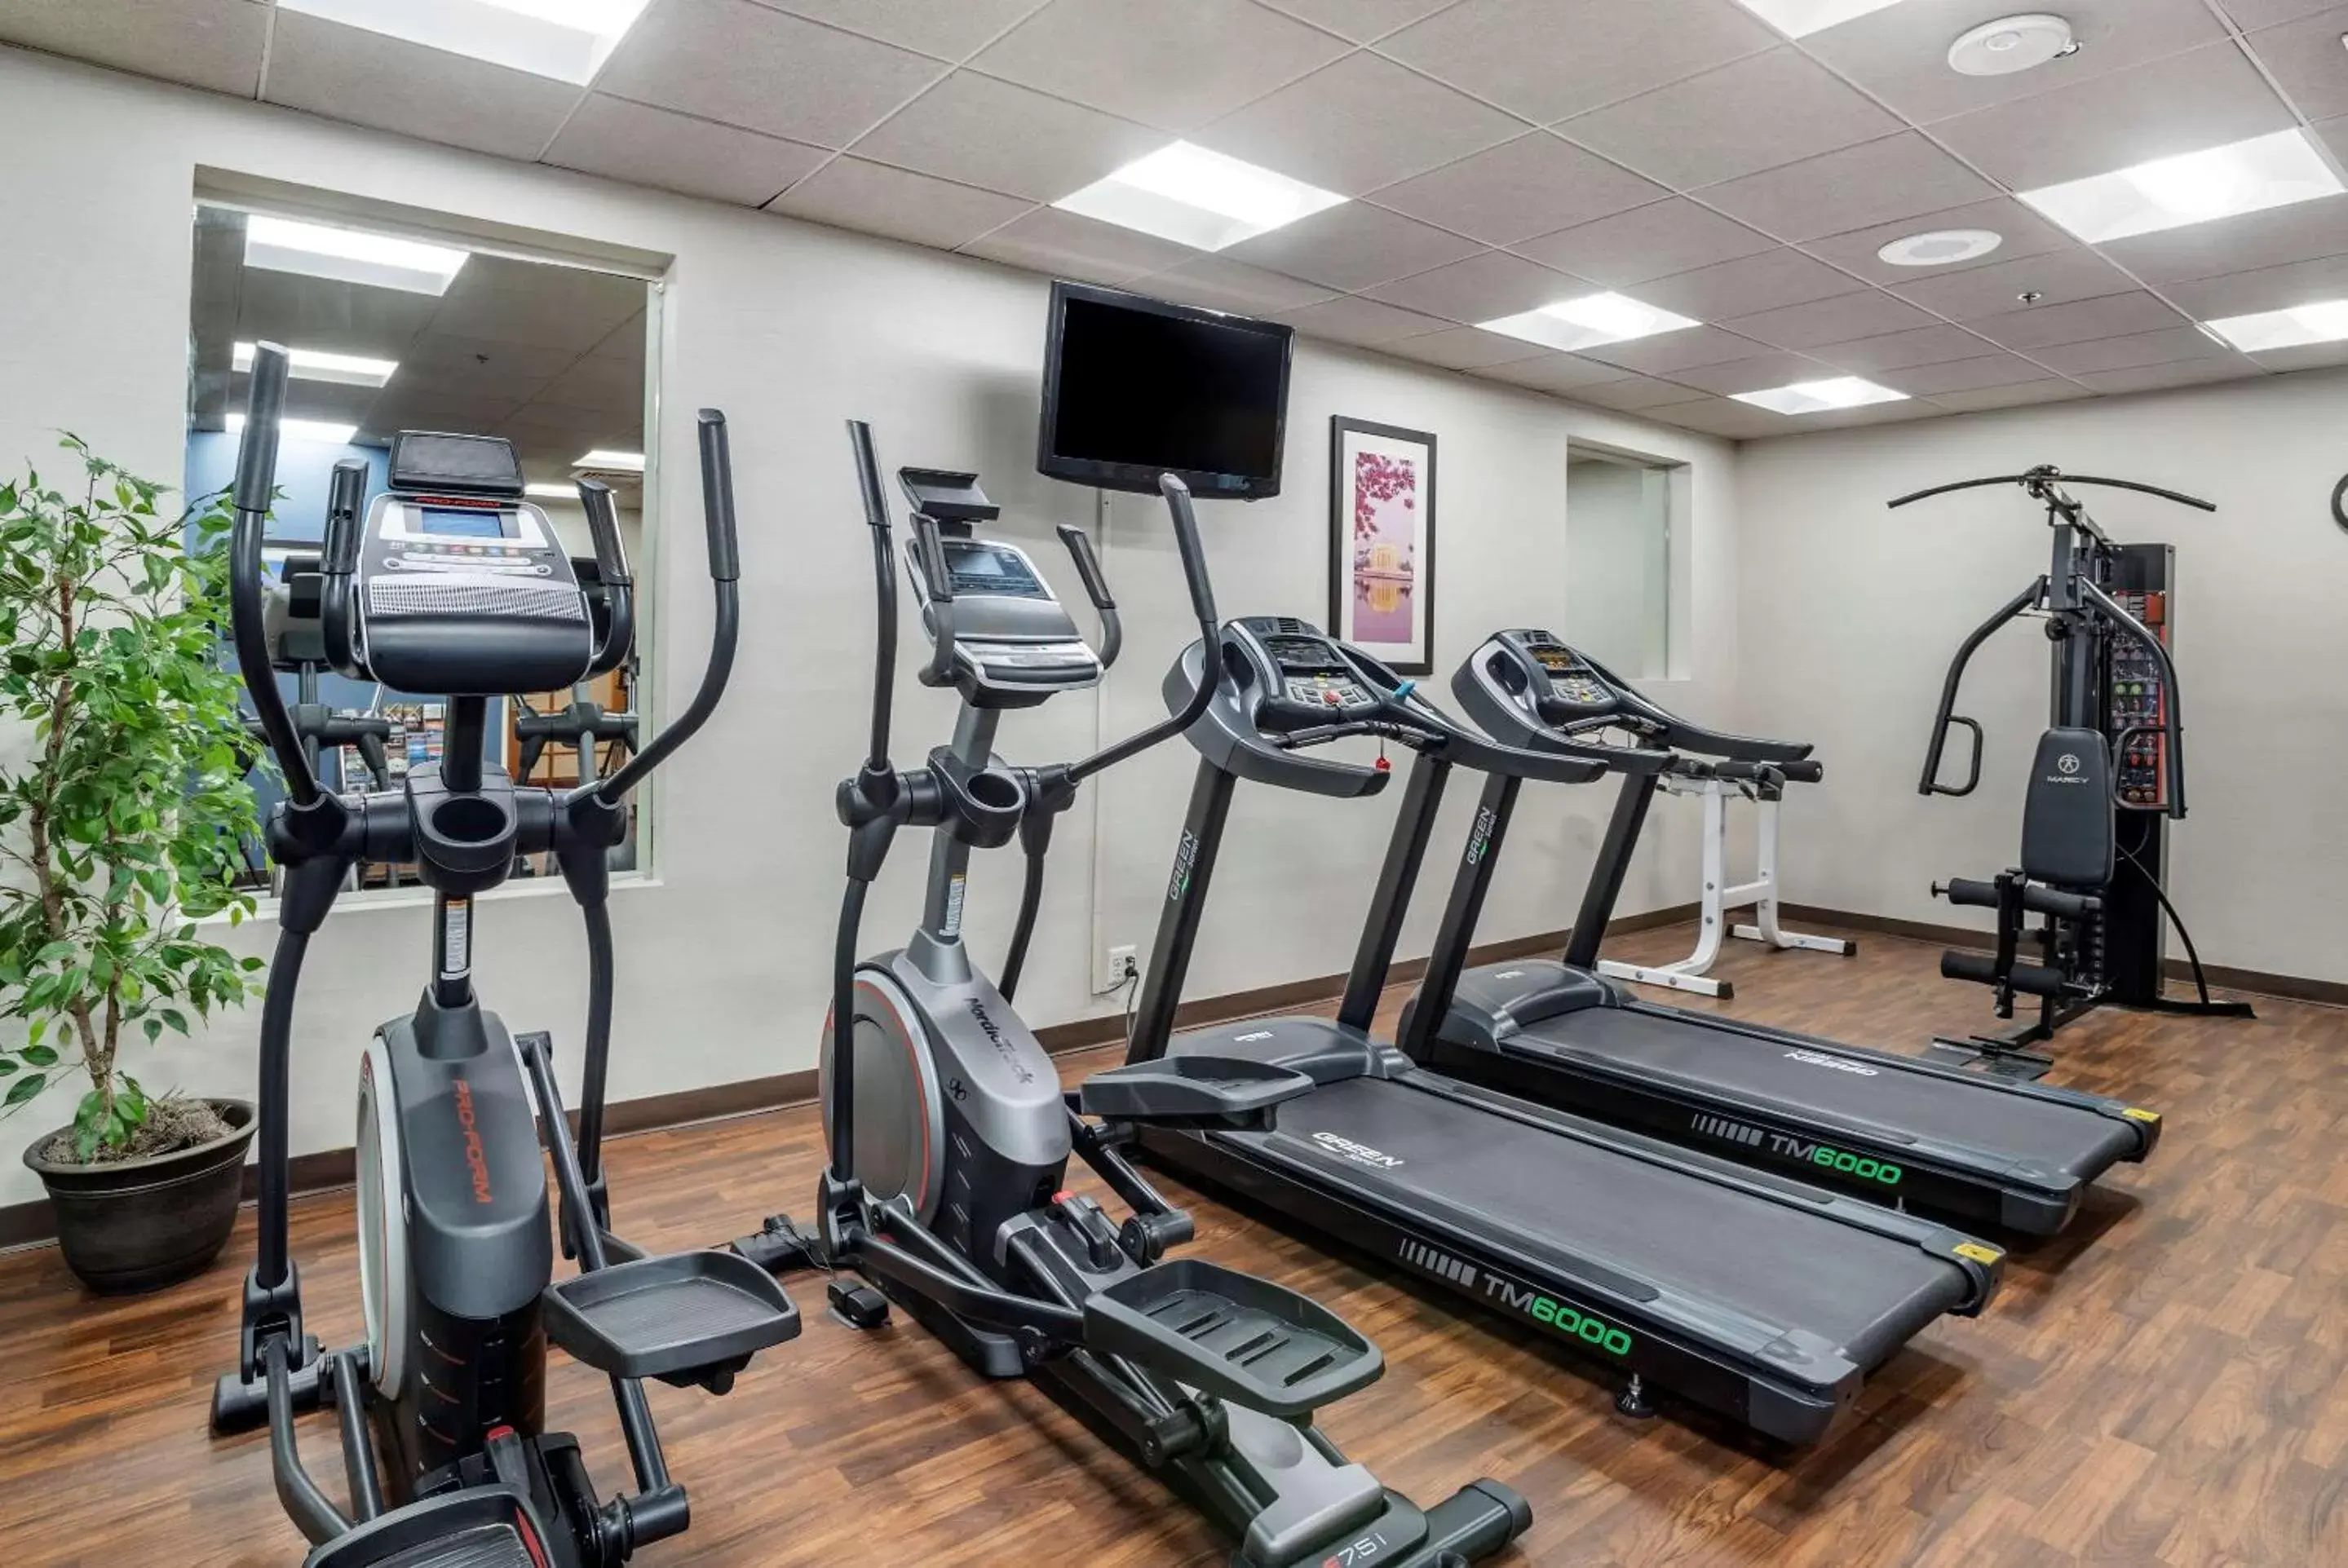 Fitness centre/facilities, Fitness Center/Facilities in Comfort Inn Shady Grove - Gaithersburg - Rockville